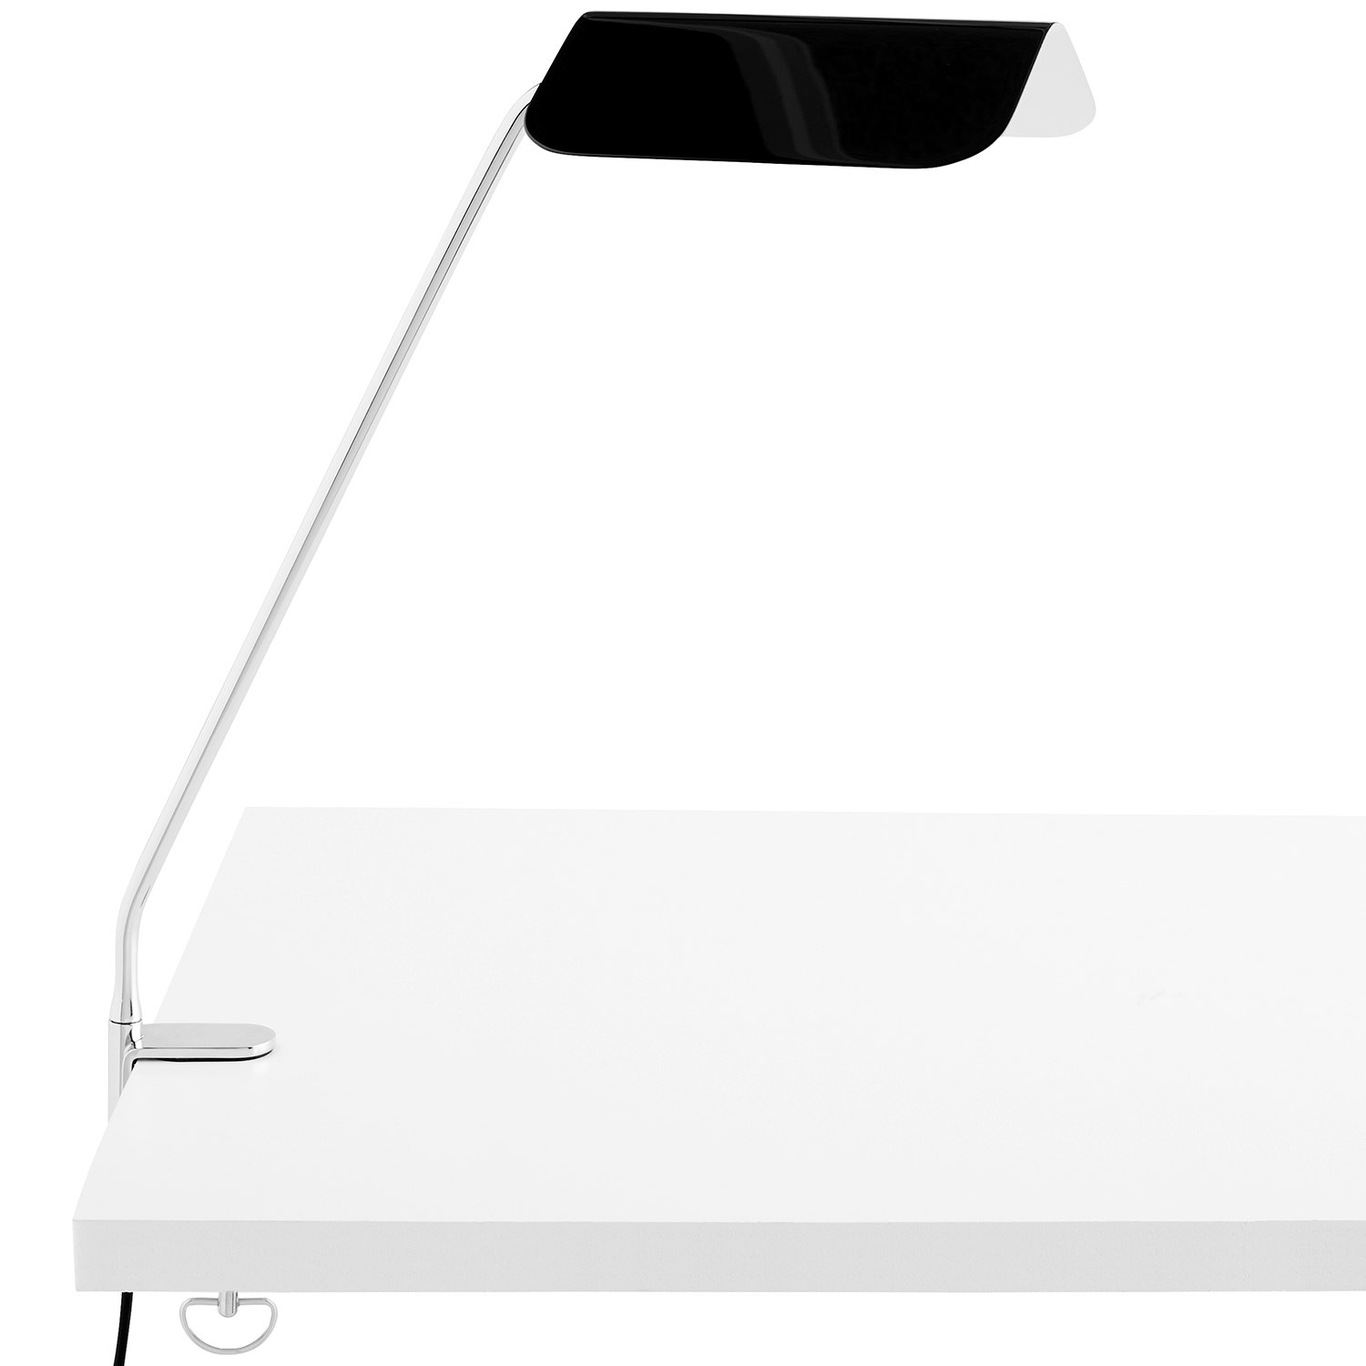 Apex Desk Lamp With Clamp, Iron Black